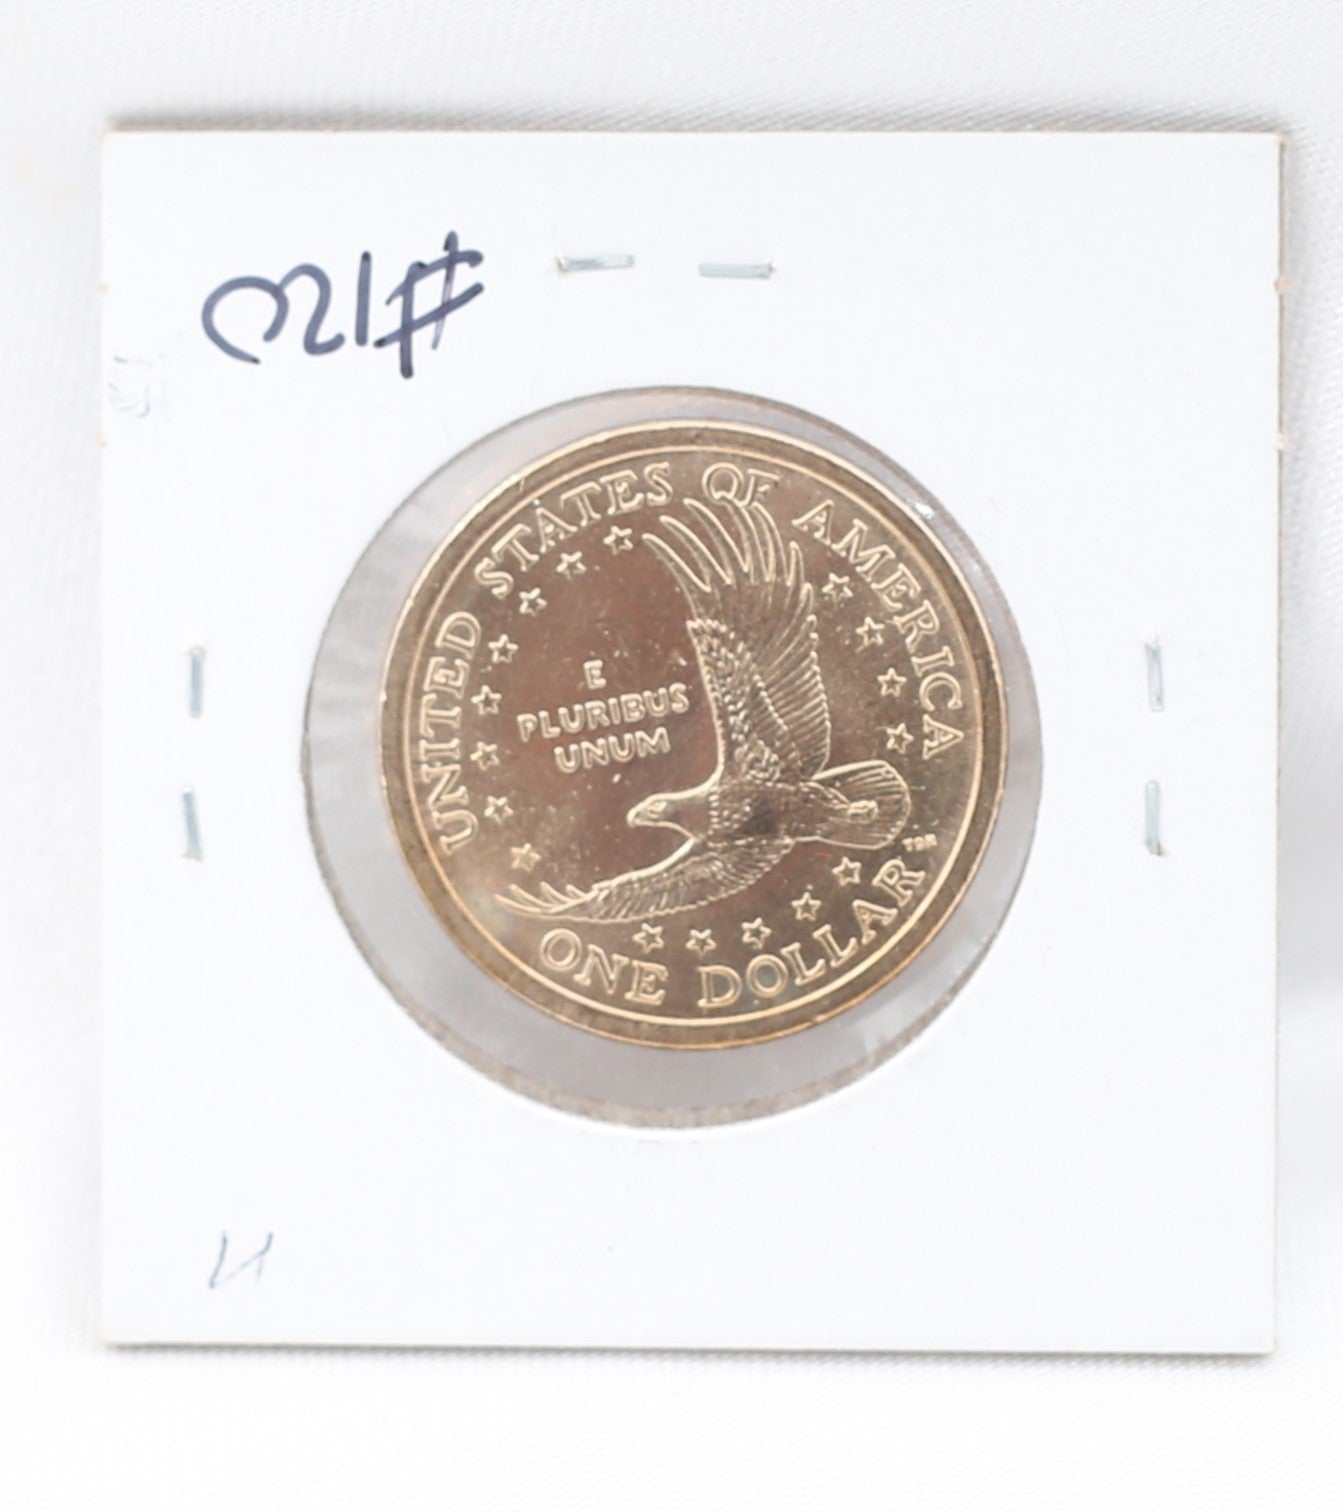 2005 P Sacagawea Dollar coin